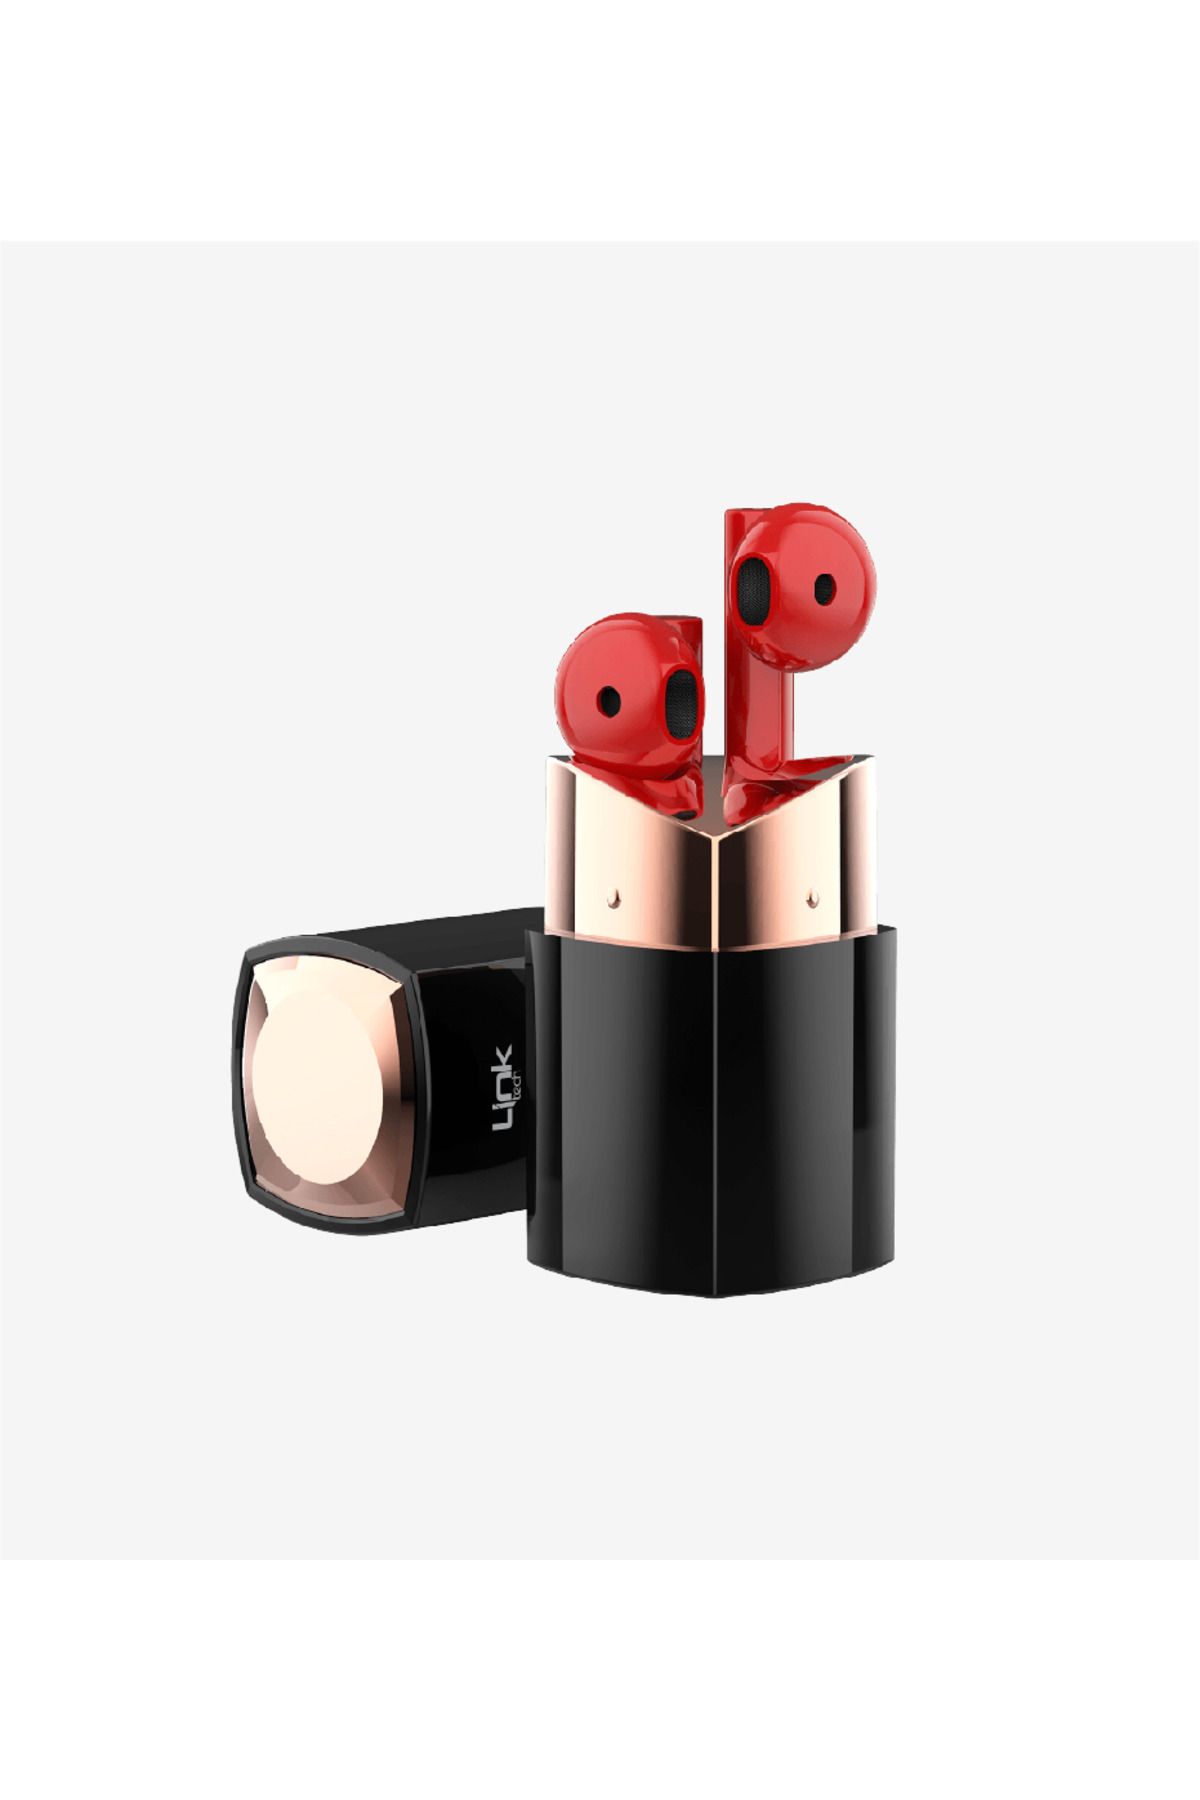 Link Tech AP10 Earbuds Rouge Bluetooth Kulaklık, Ruj Şeklinde Estetik Kutu.